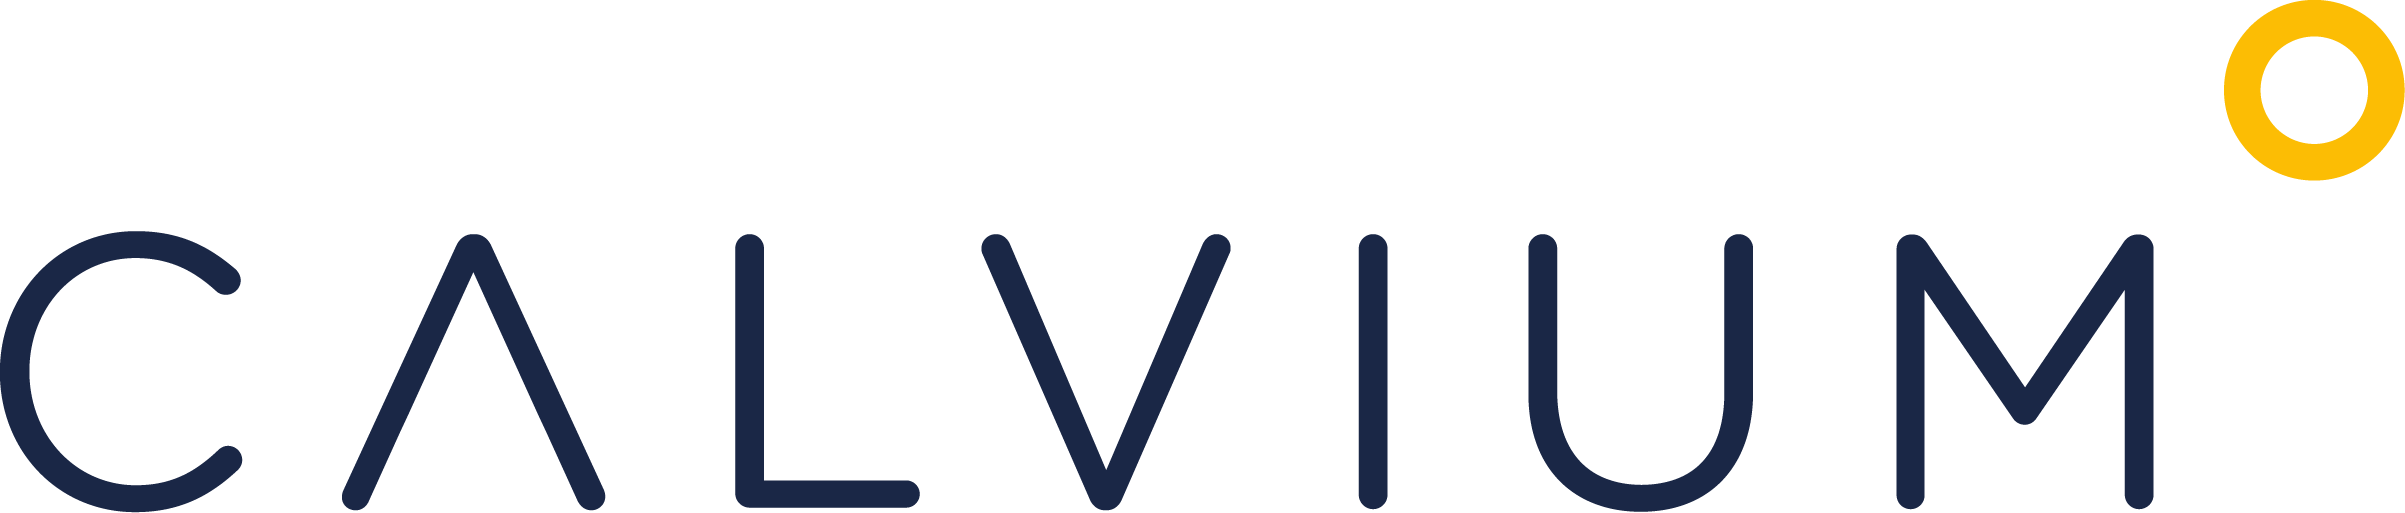 Linked logo for Calvium